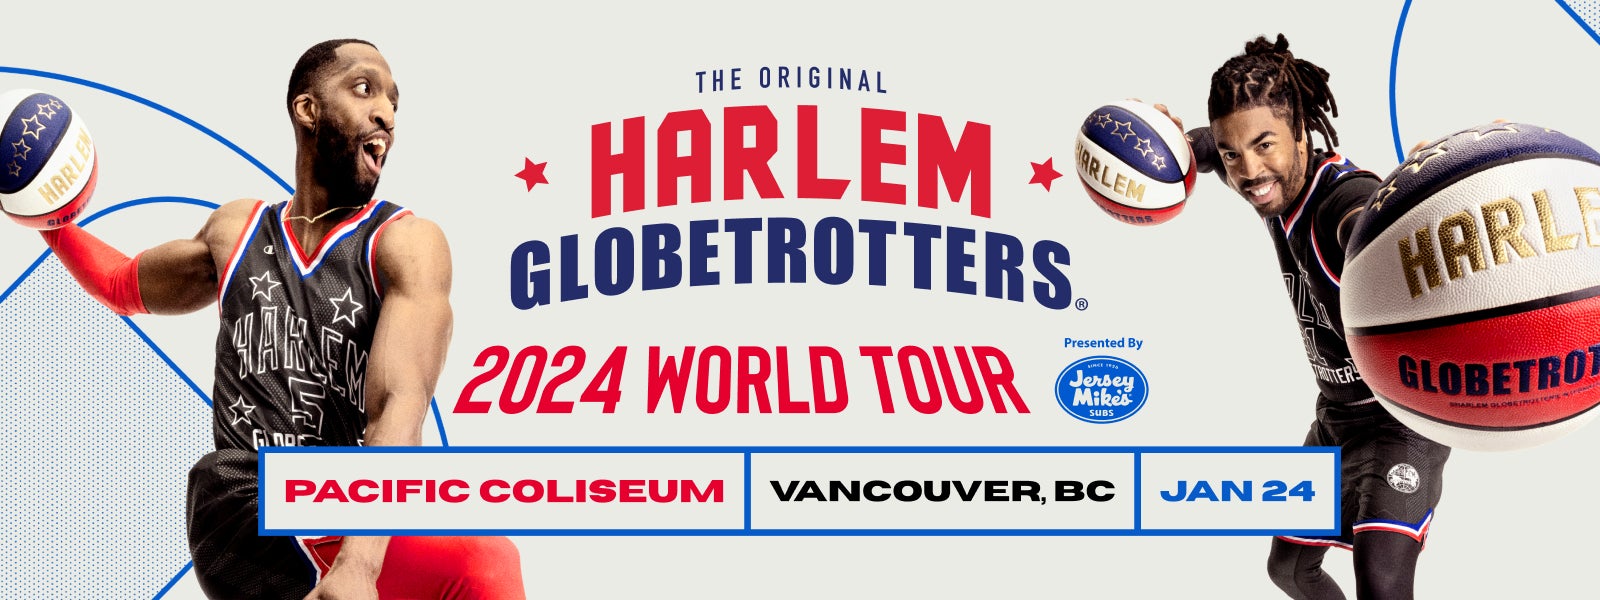 Harlem Globetrotters 2024 World Tour - Vancouver